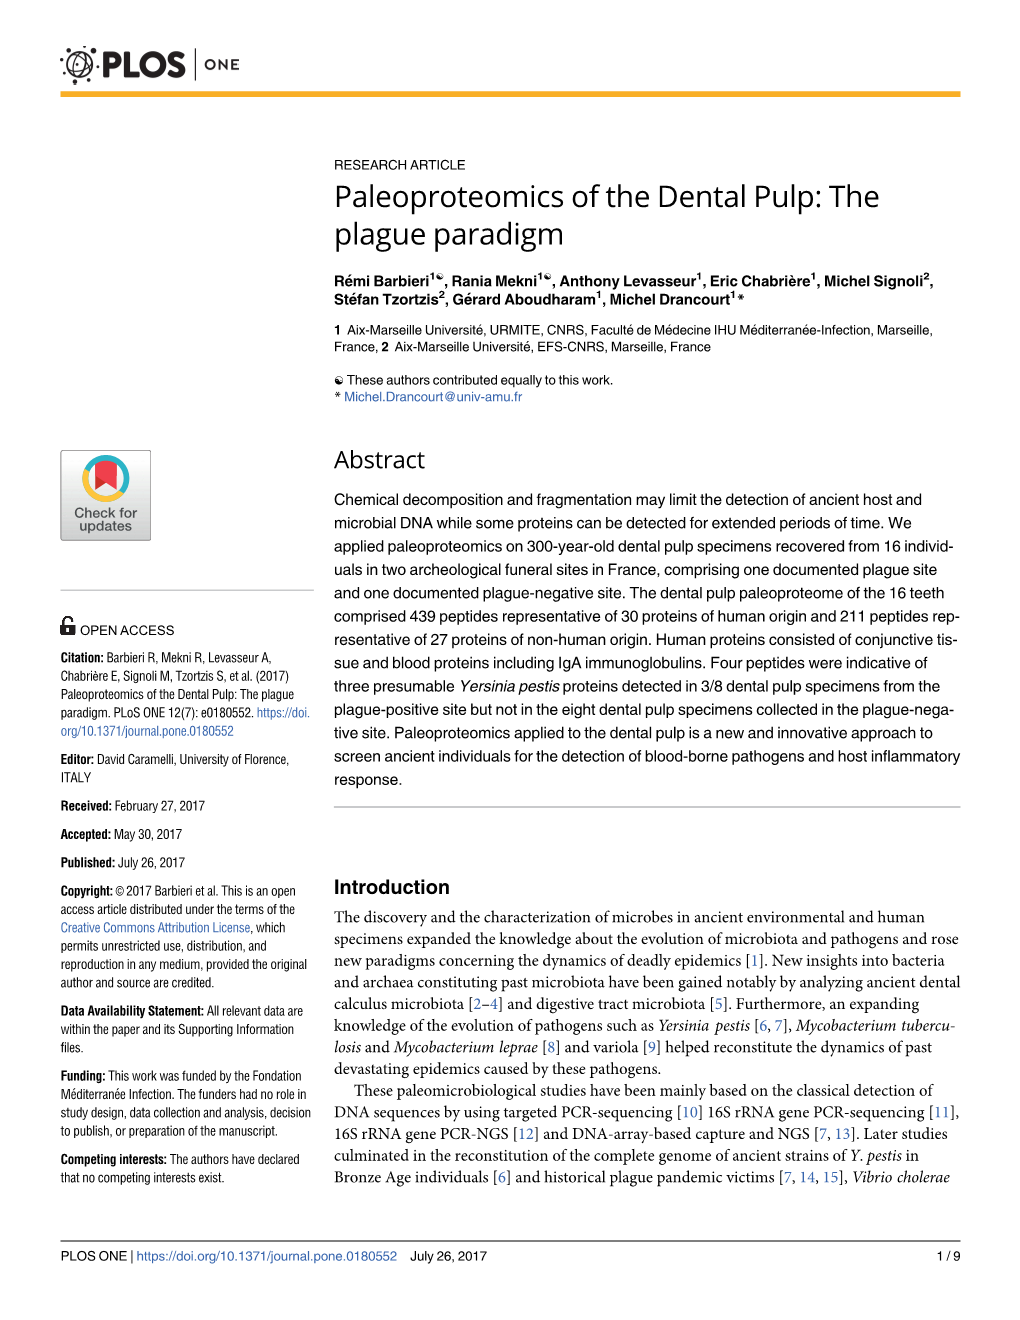 Paleoproteomics of the Dental Pulp: the Plague Paradigm